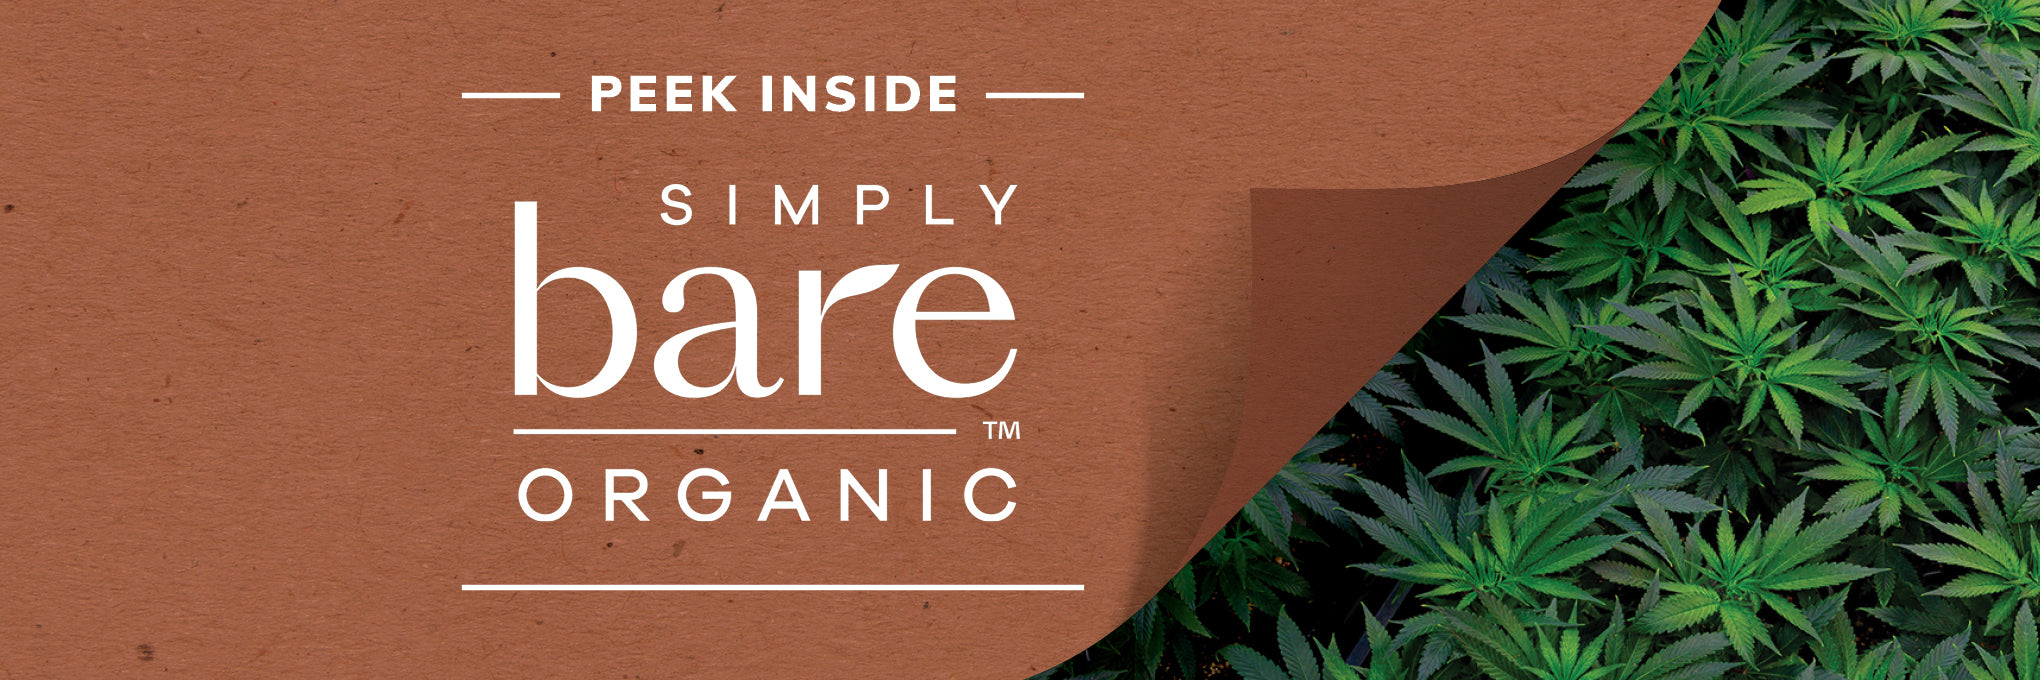 Peek Inside: Simply Bare Organic